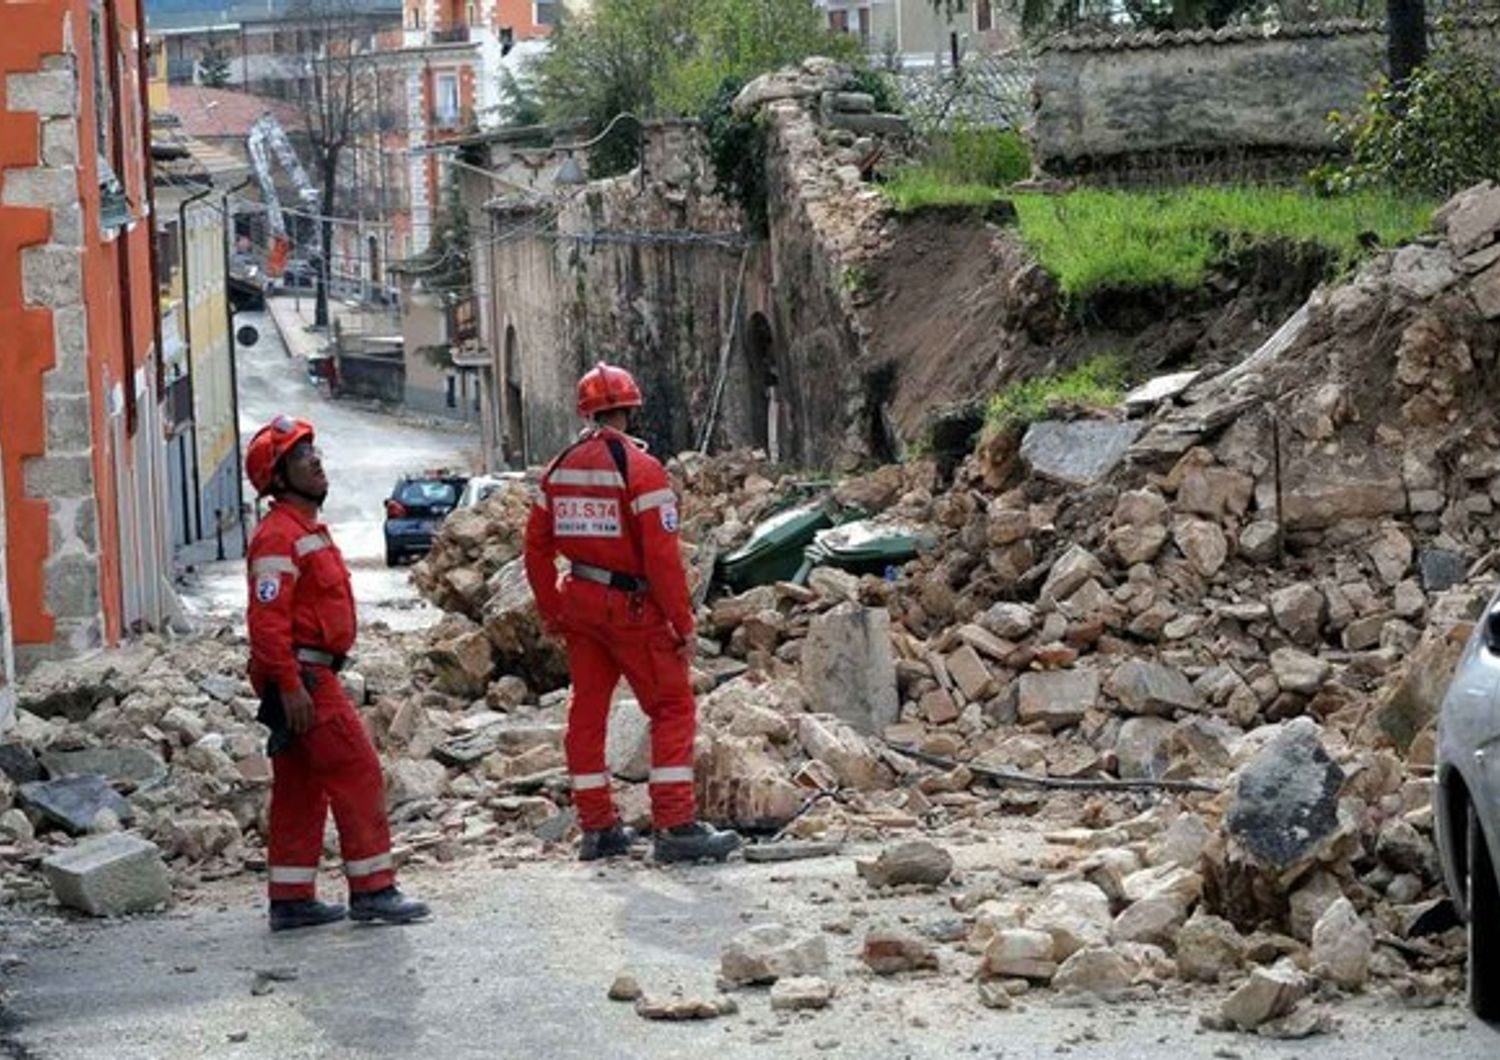 &nbsp; Terremoto sisma Abruzzo L'Aquila 6 aprile 2009 - foto mediamanager